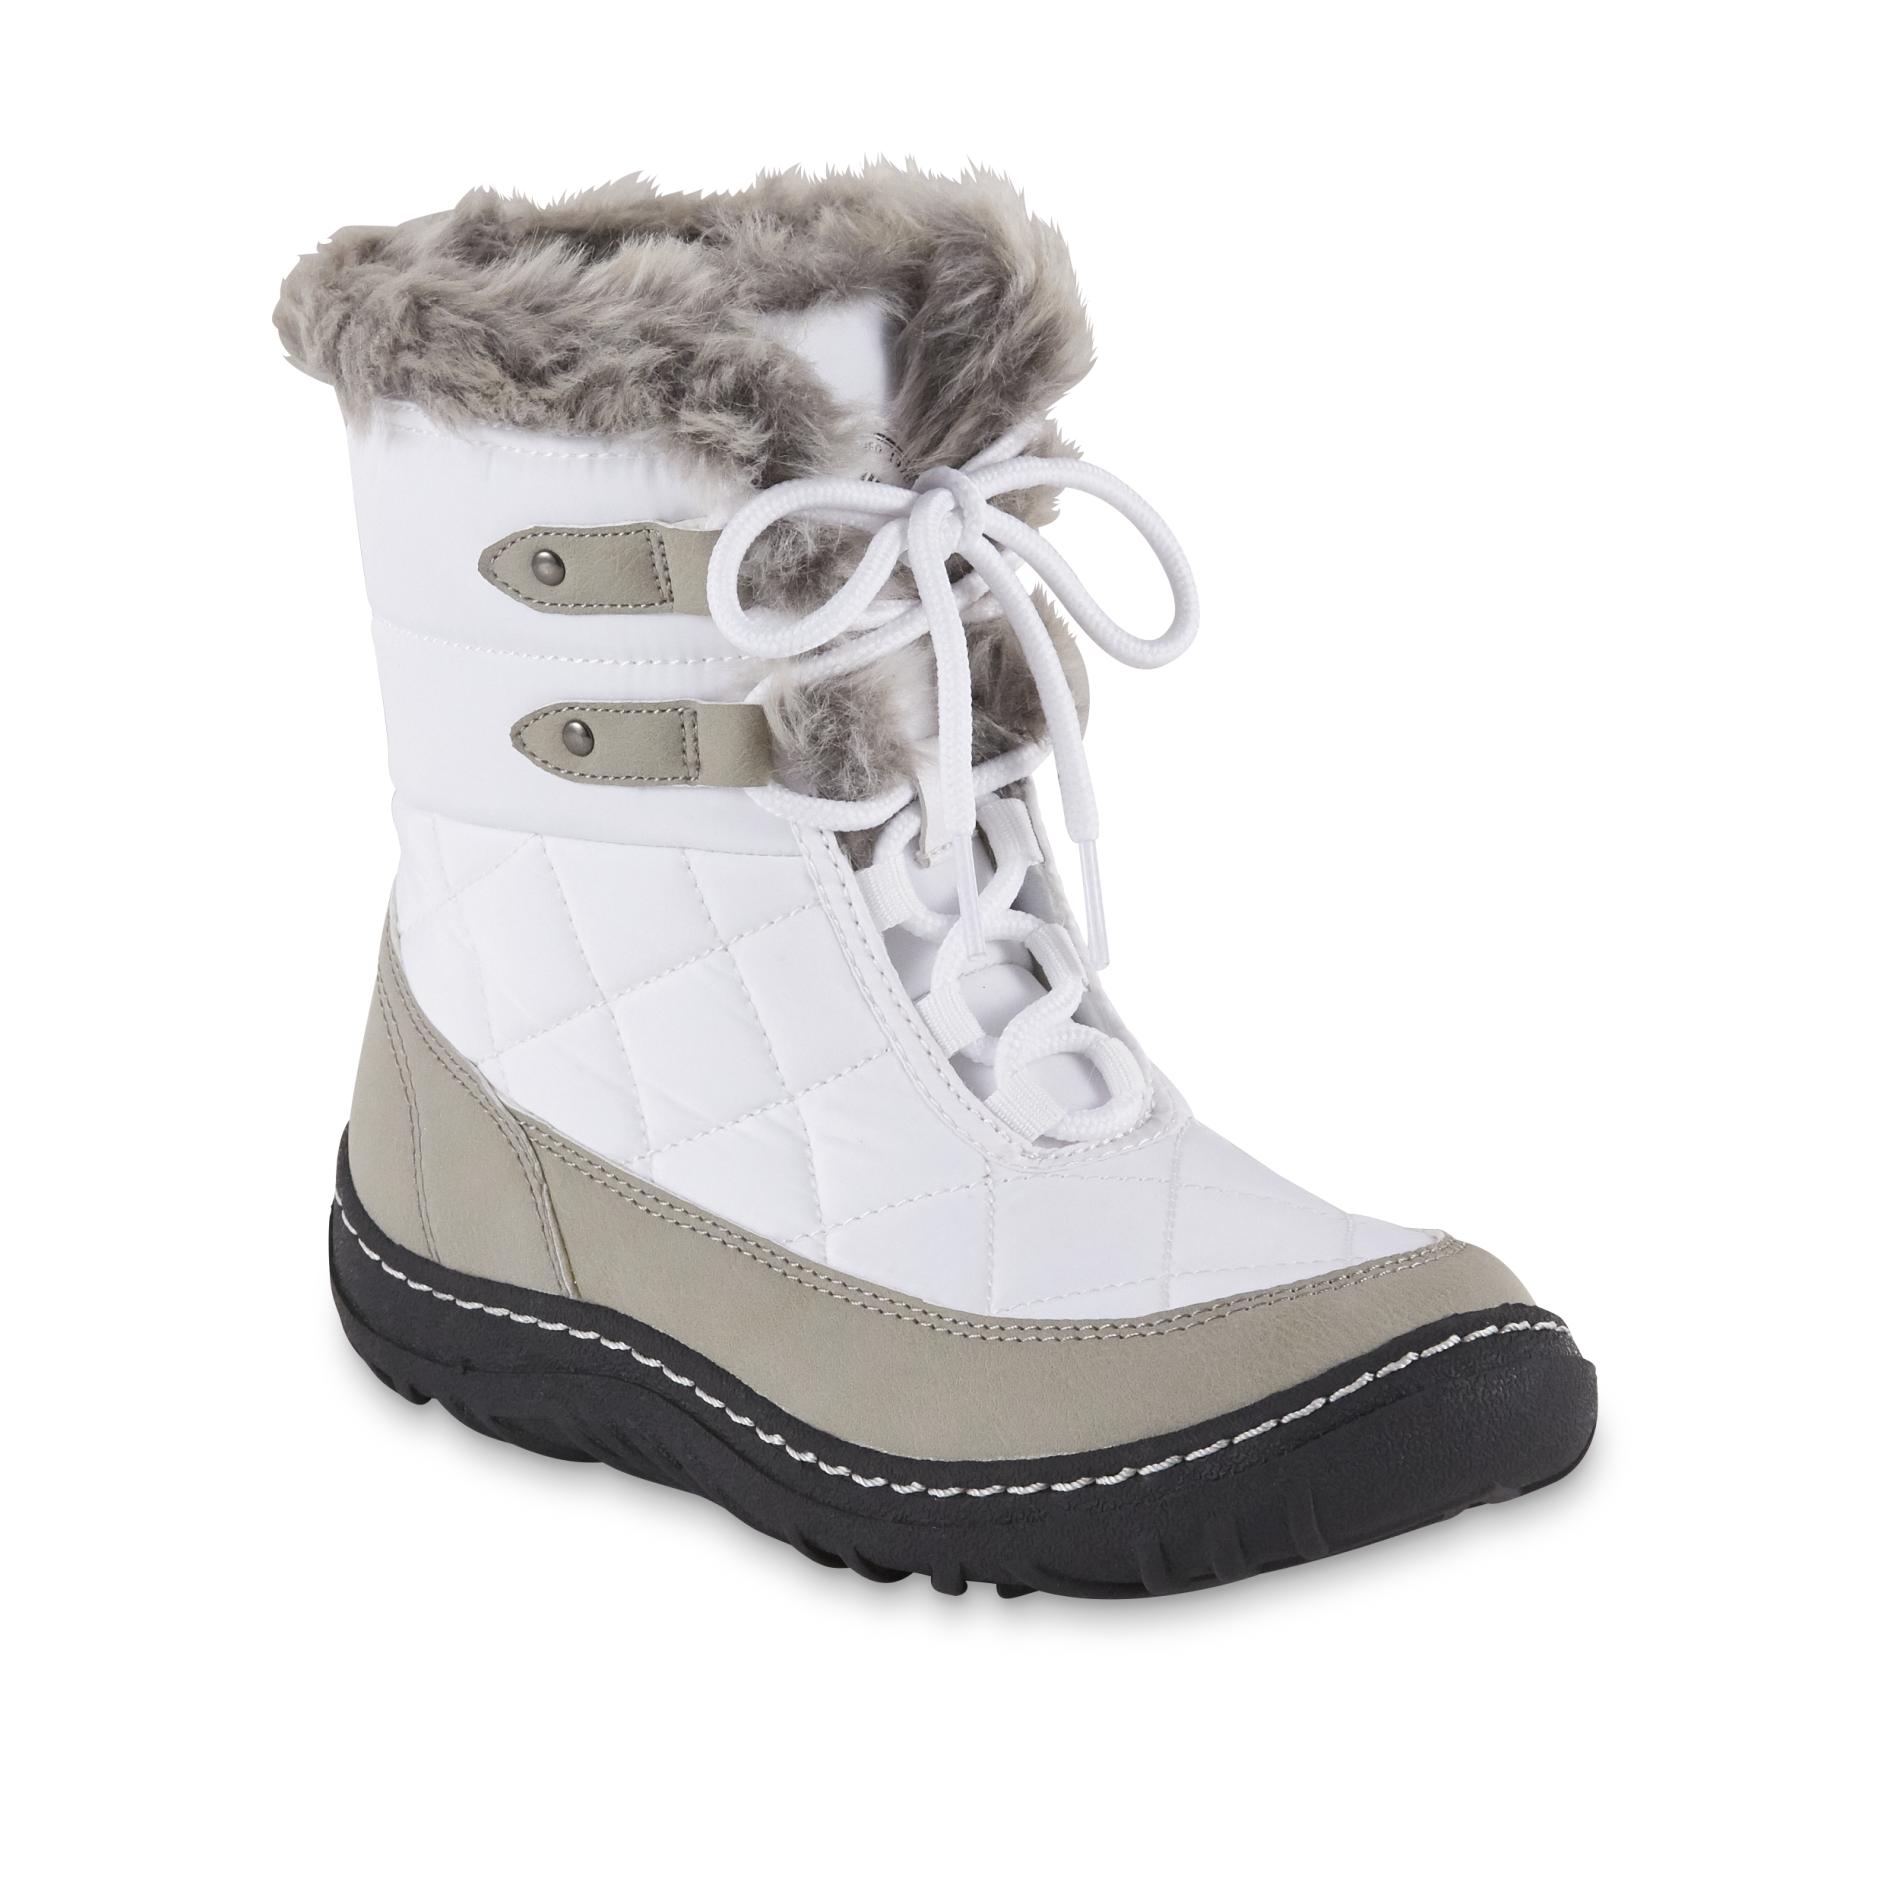 kmart snow boots womens